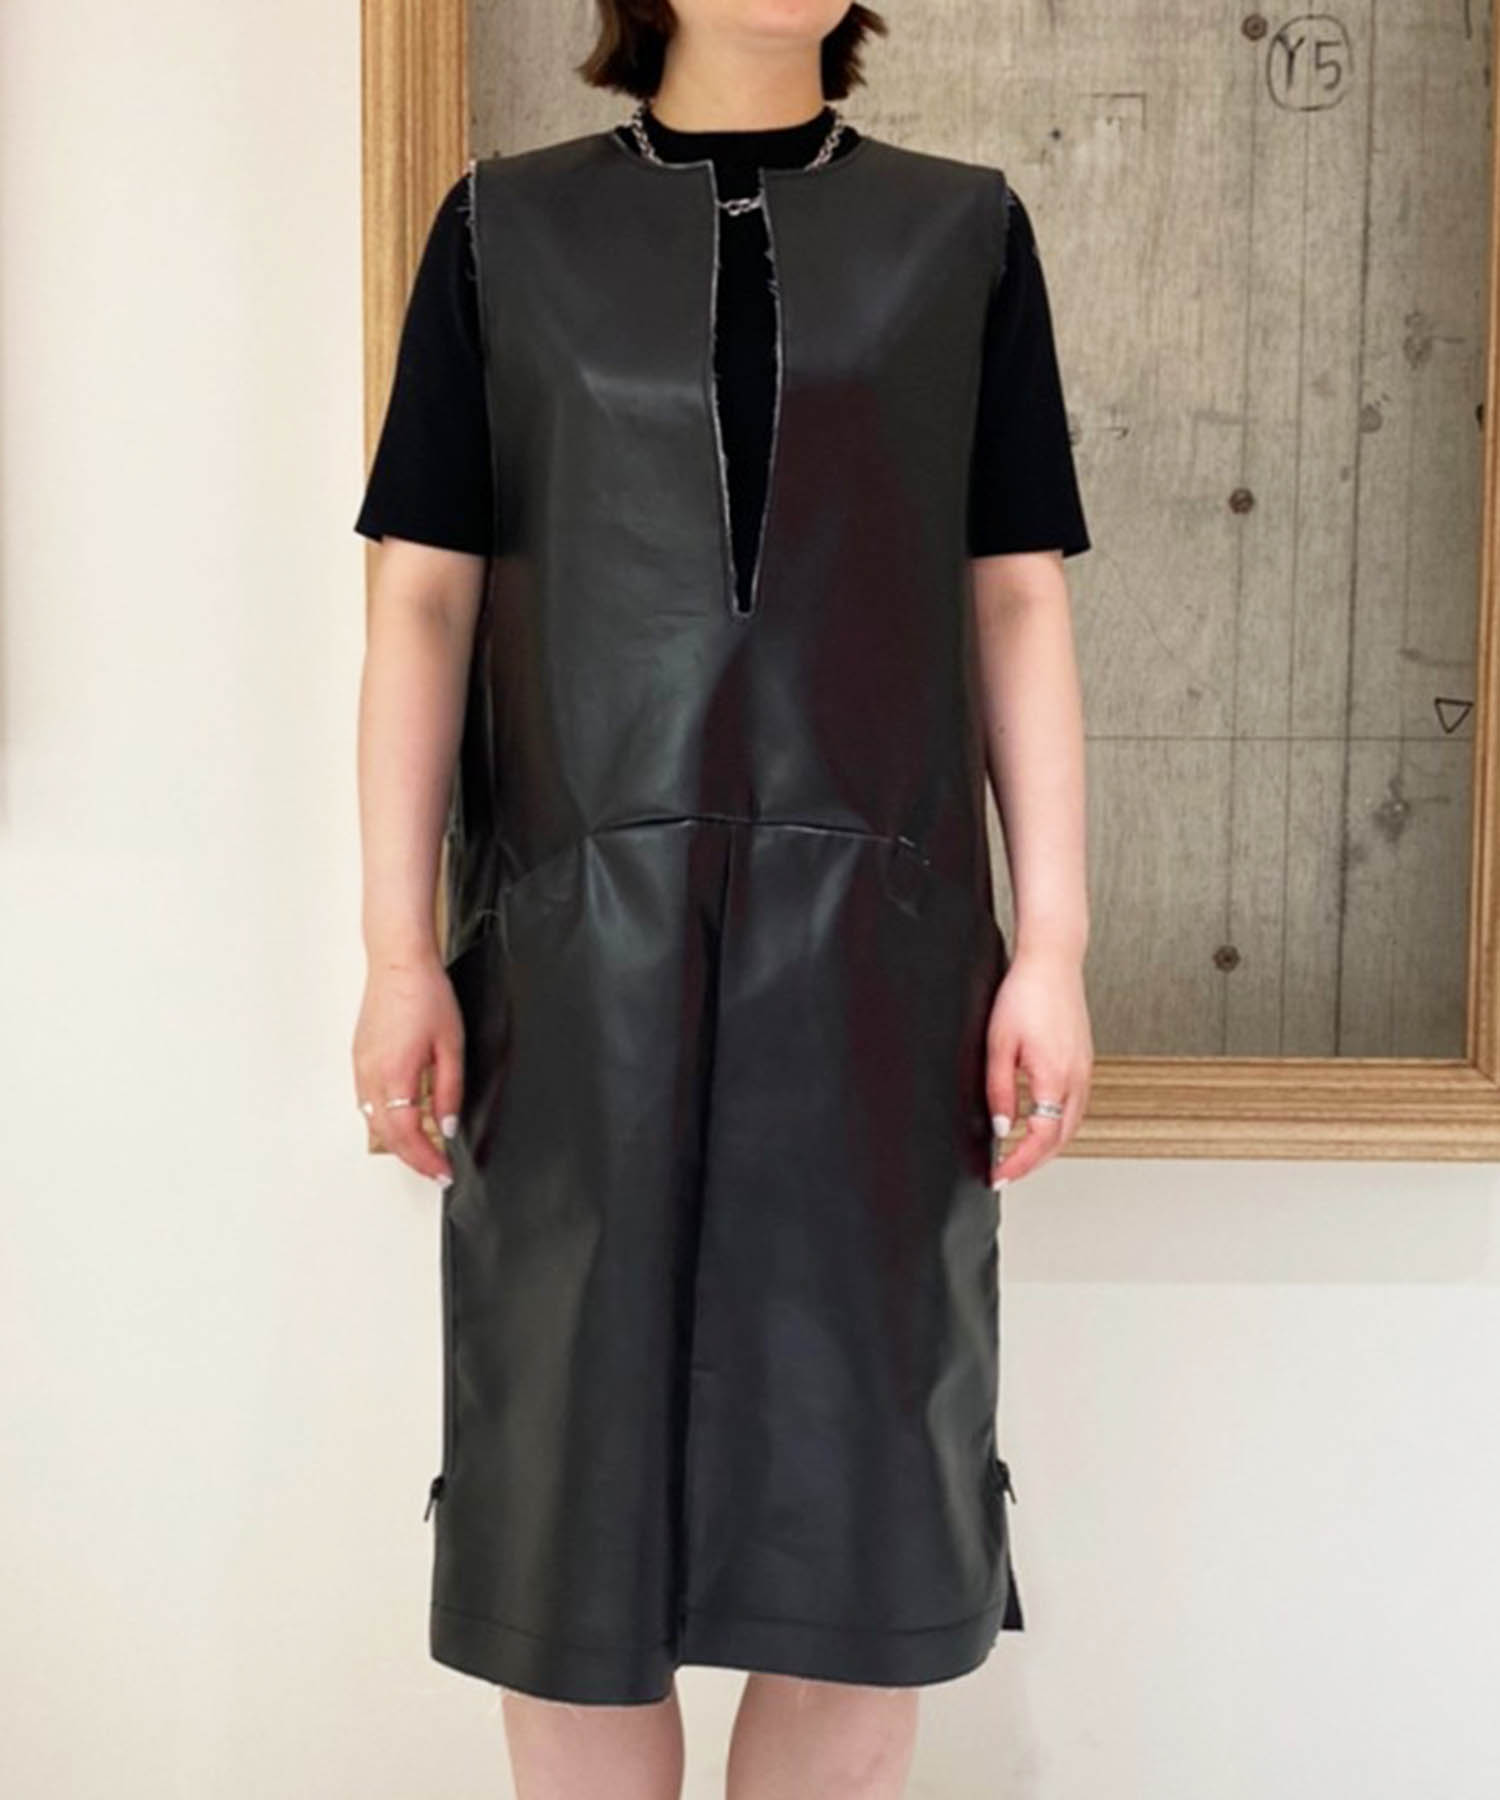 Fake leather bonding dress